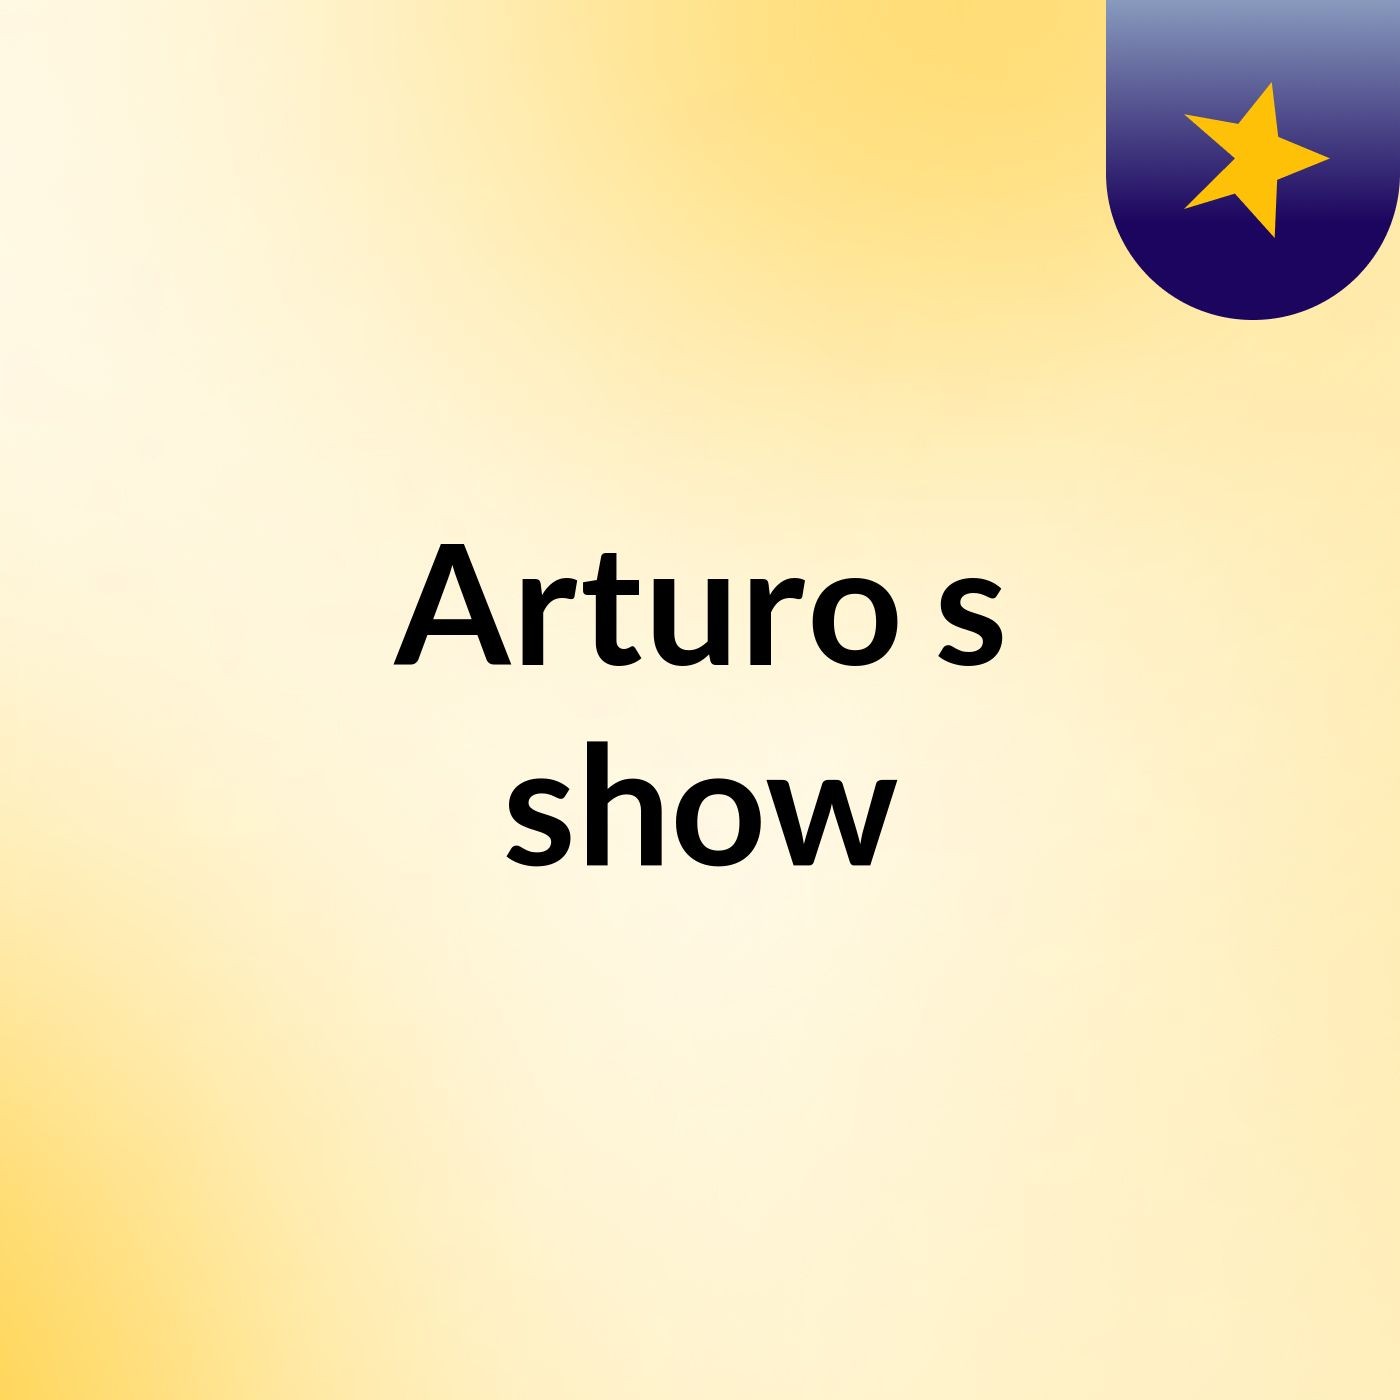 Arturo's show